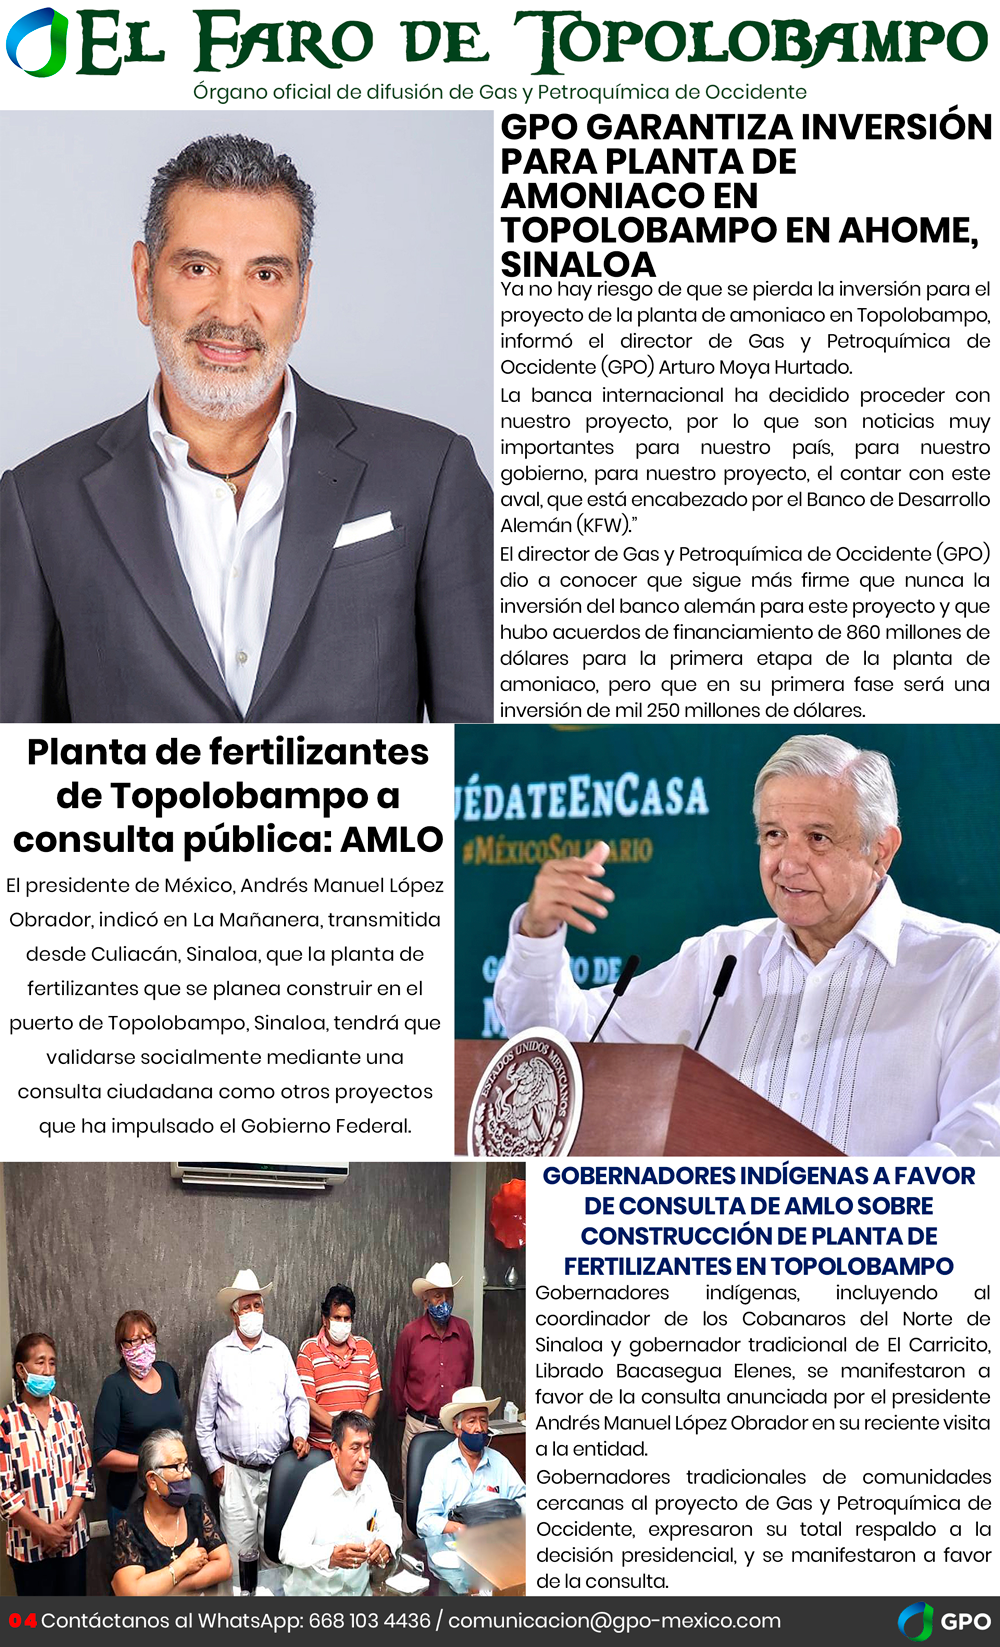 GPO - El Faro de Topolobampo - B - Español - Agosto 2020